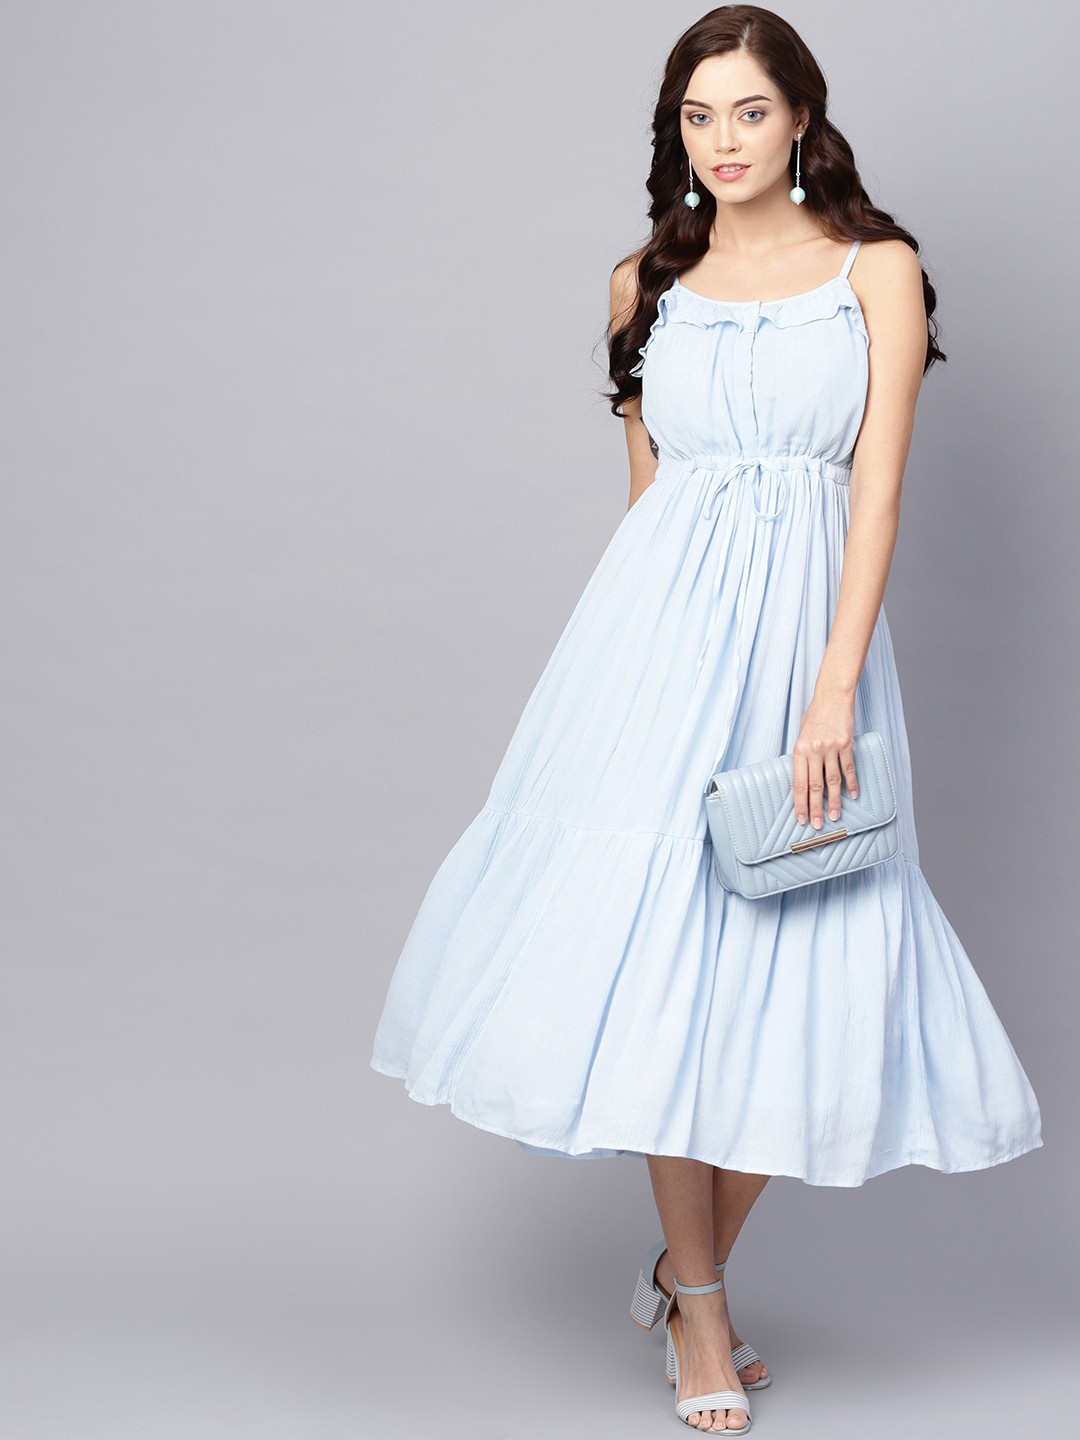 Buy Designer Dresses Online at Best Price | Myntra